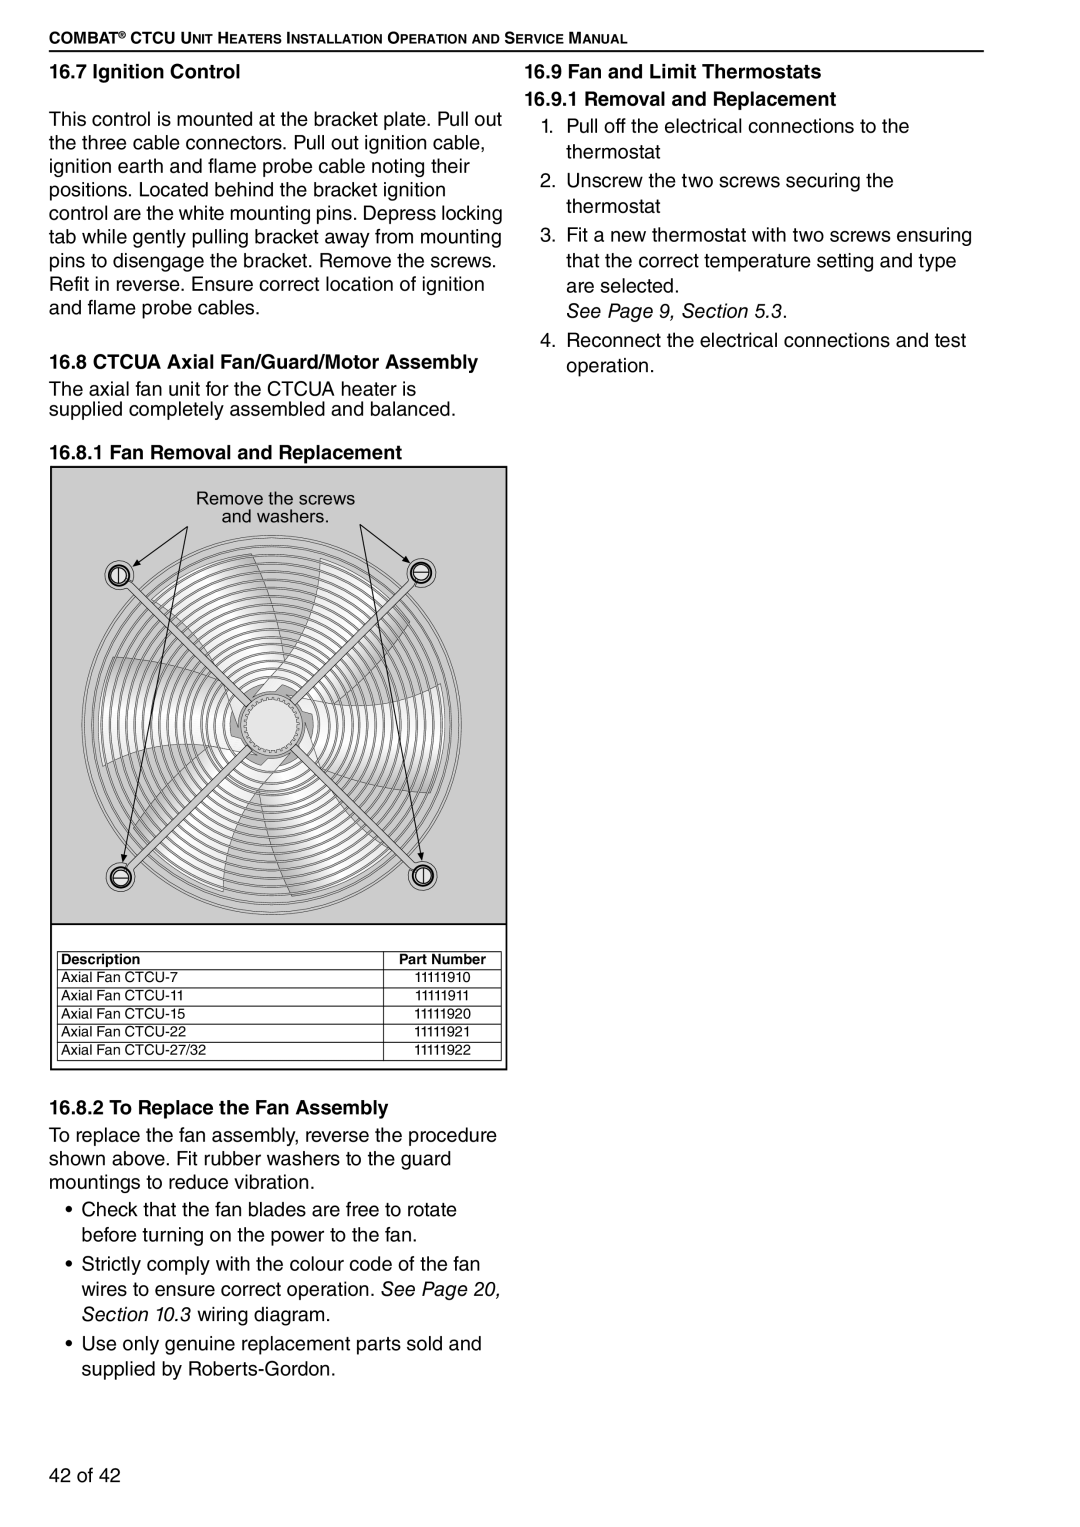 Roberts Gorden CTCU 27, CTCU 15, CTCU 7 Ignition Control, CTCUA Axial Fan/Guard/Motor Assembly, Fan Removal and Replacement 